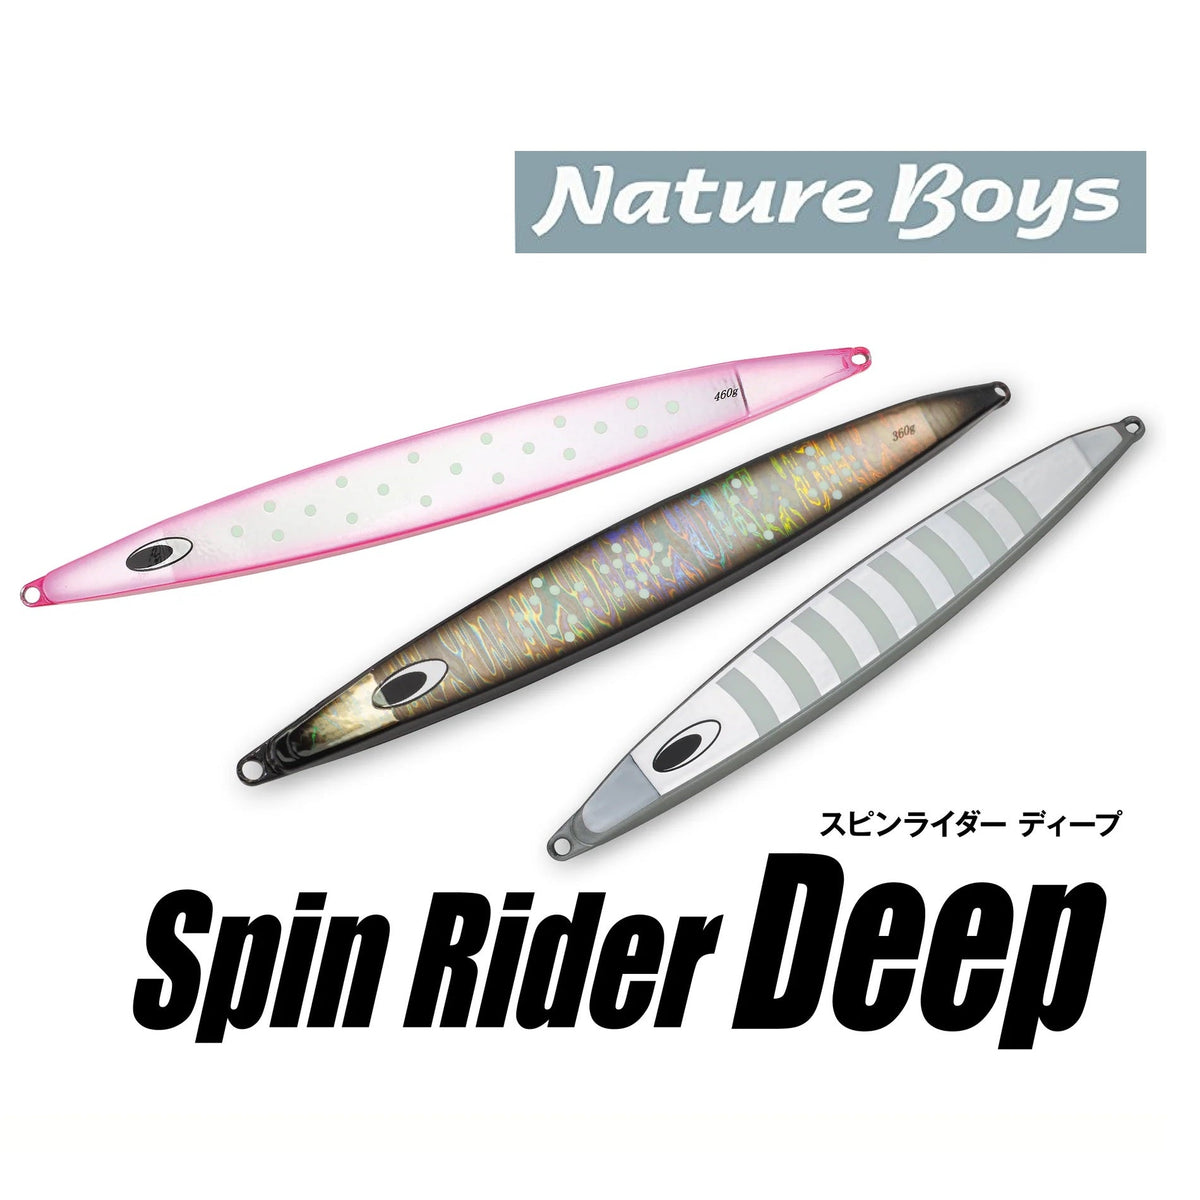 Nature Boys Metal jig Spin Rider Deep 180g